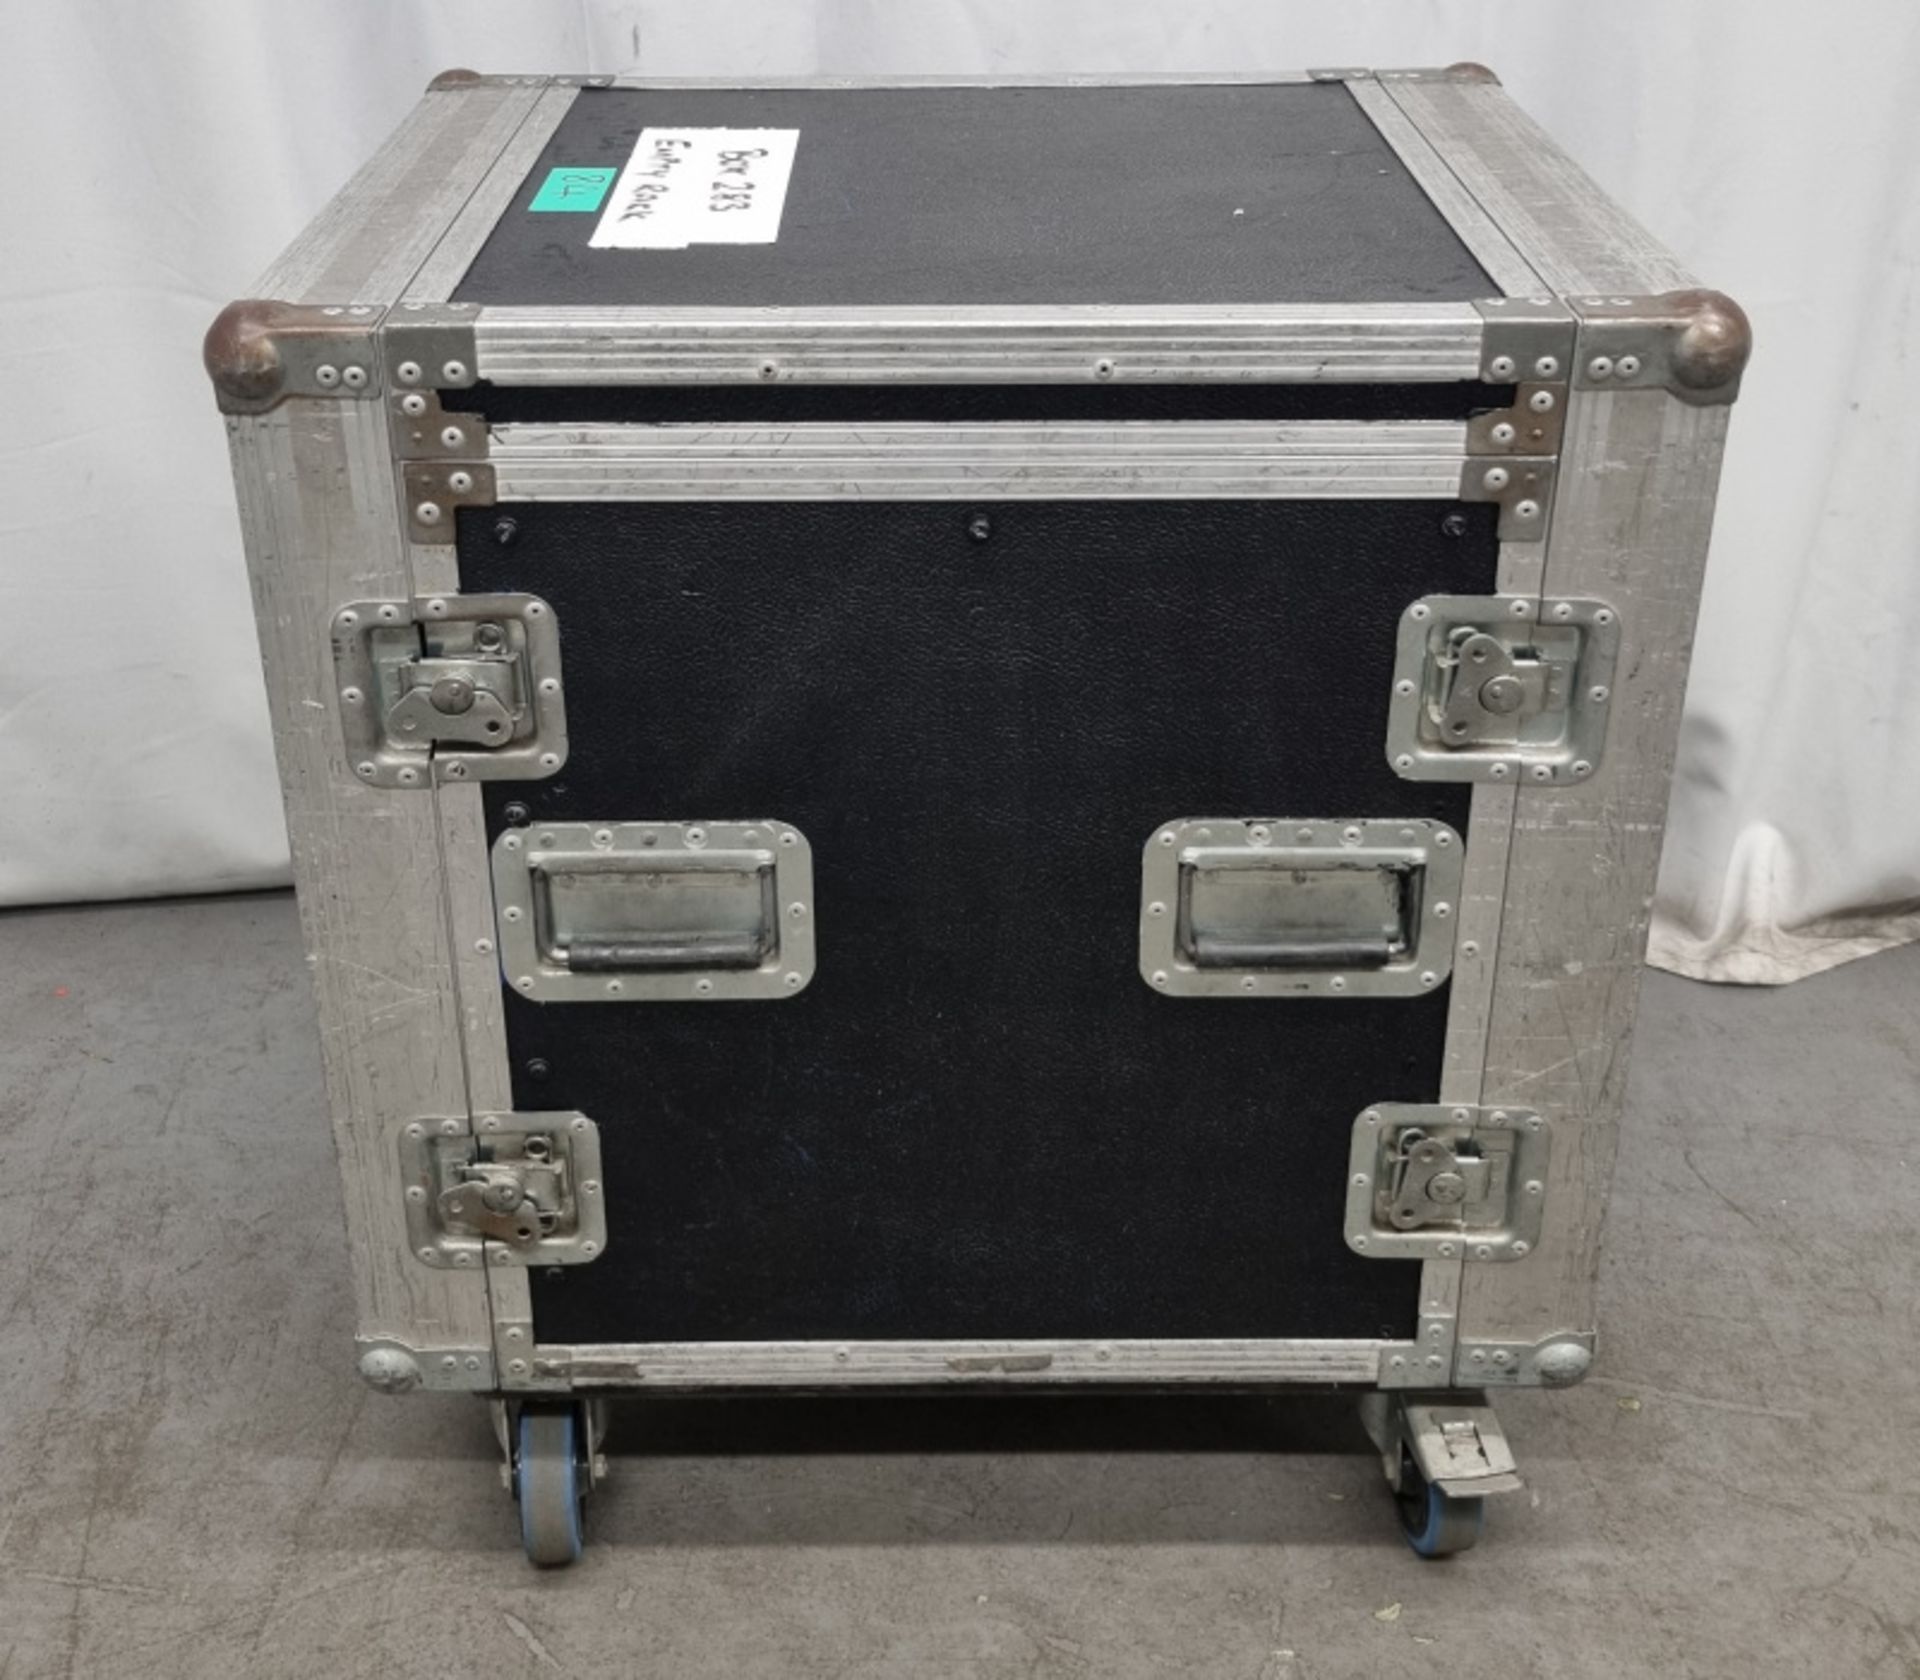 Empty Wheeled Flight case with internal rack - Dimensions L51.5 x W59 x H78 (including wheels)